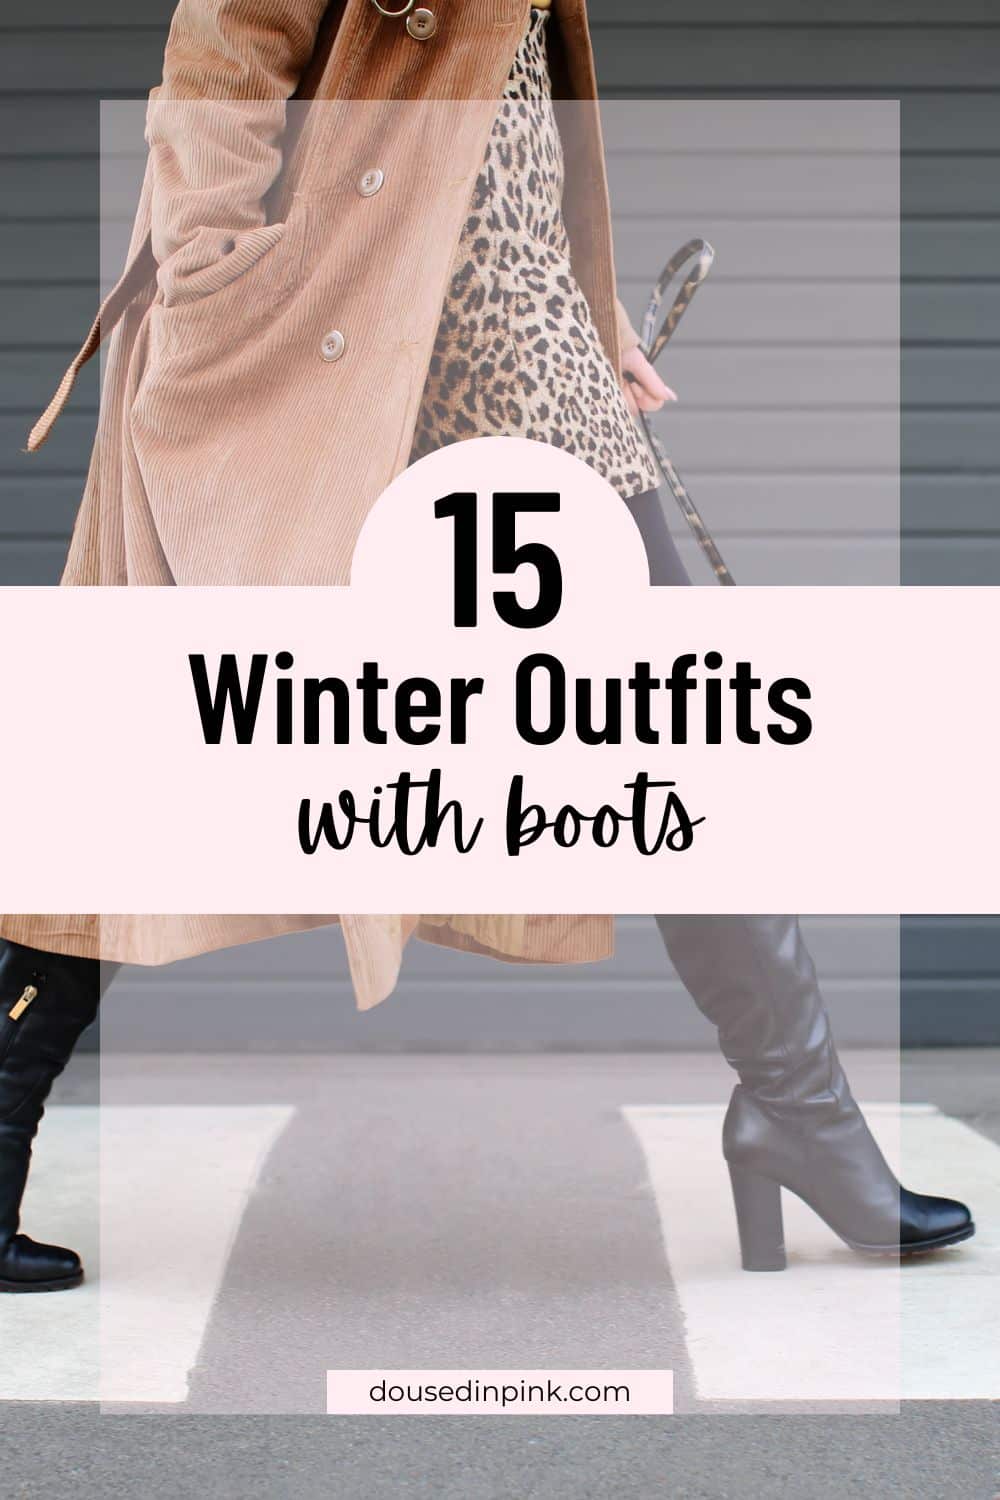 Leggings & Lug Sole Chelsea Boots: 5 Cute Winter Outfit Ideas